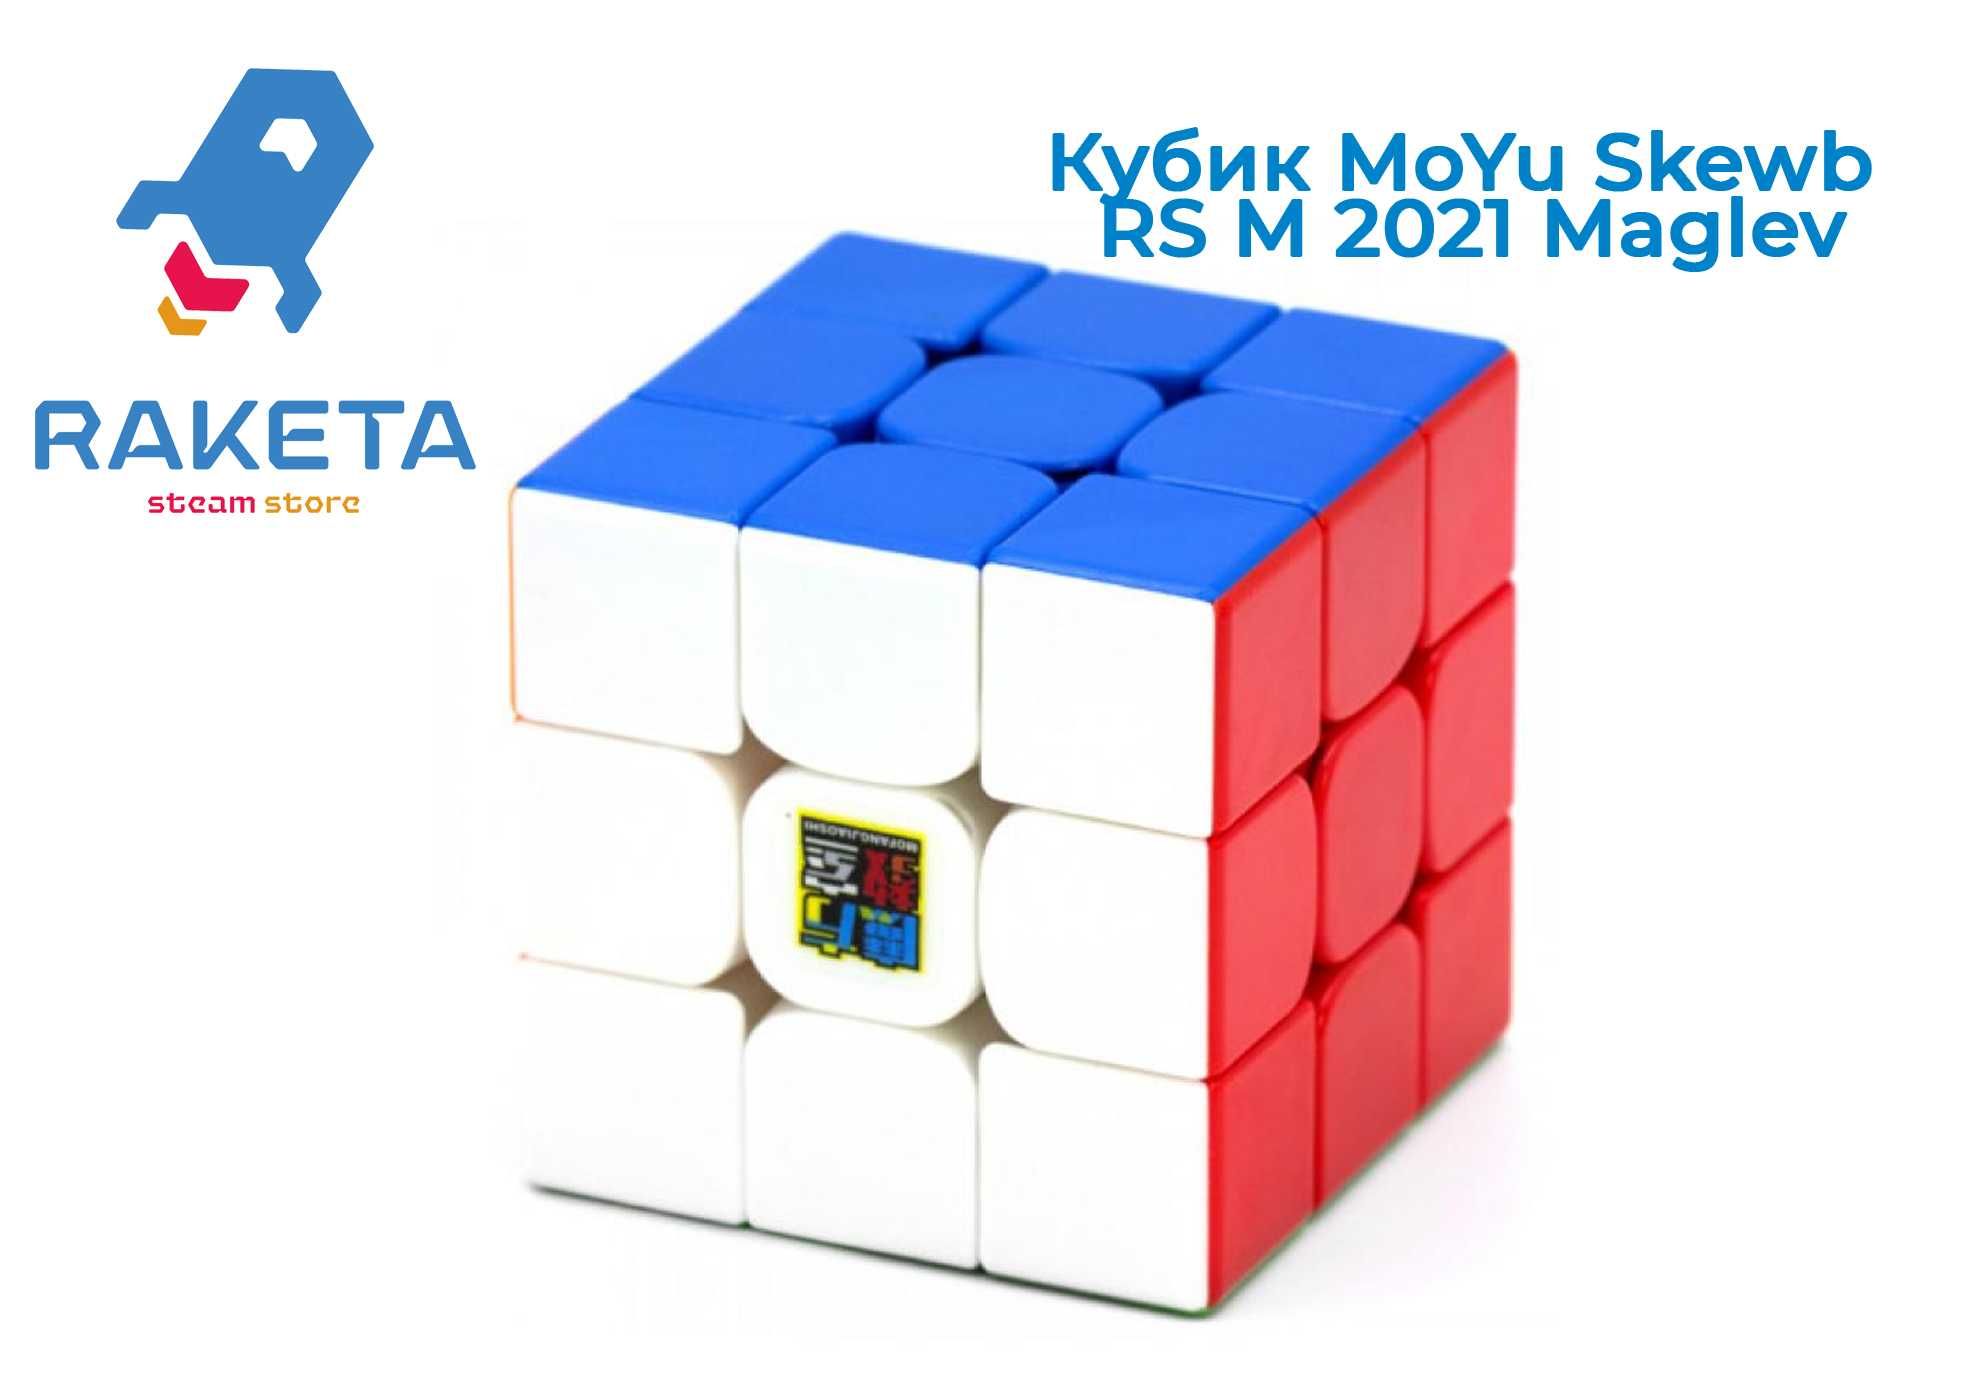 Kubik Rubik Moyu / Кубики Рубика / Катта ассортимент